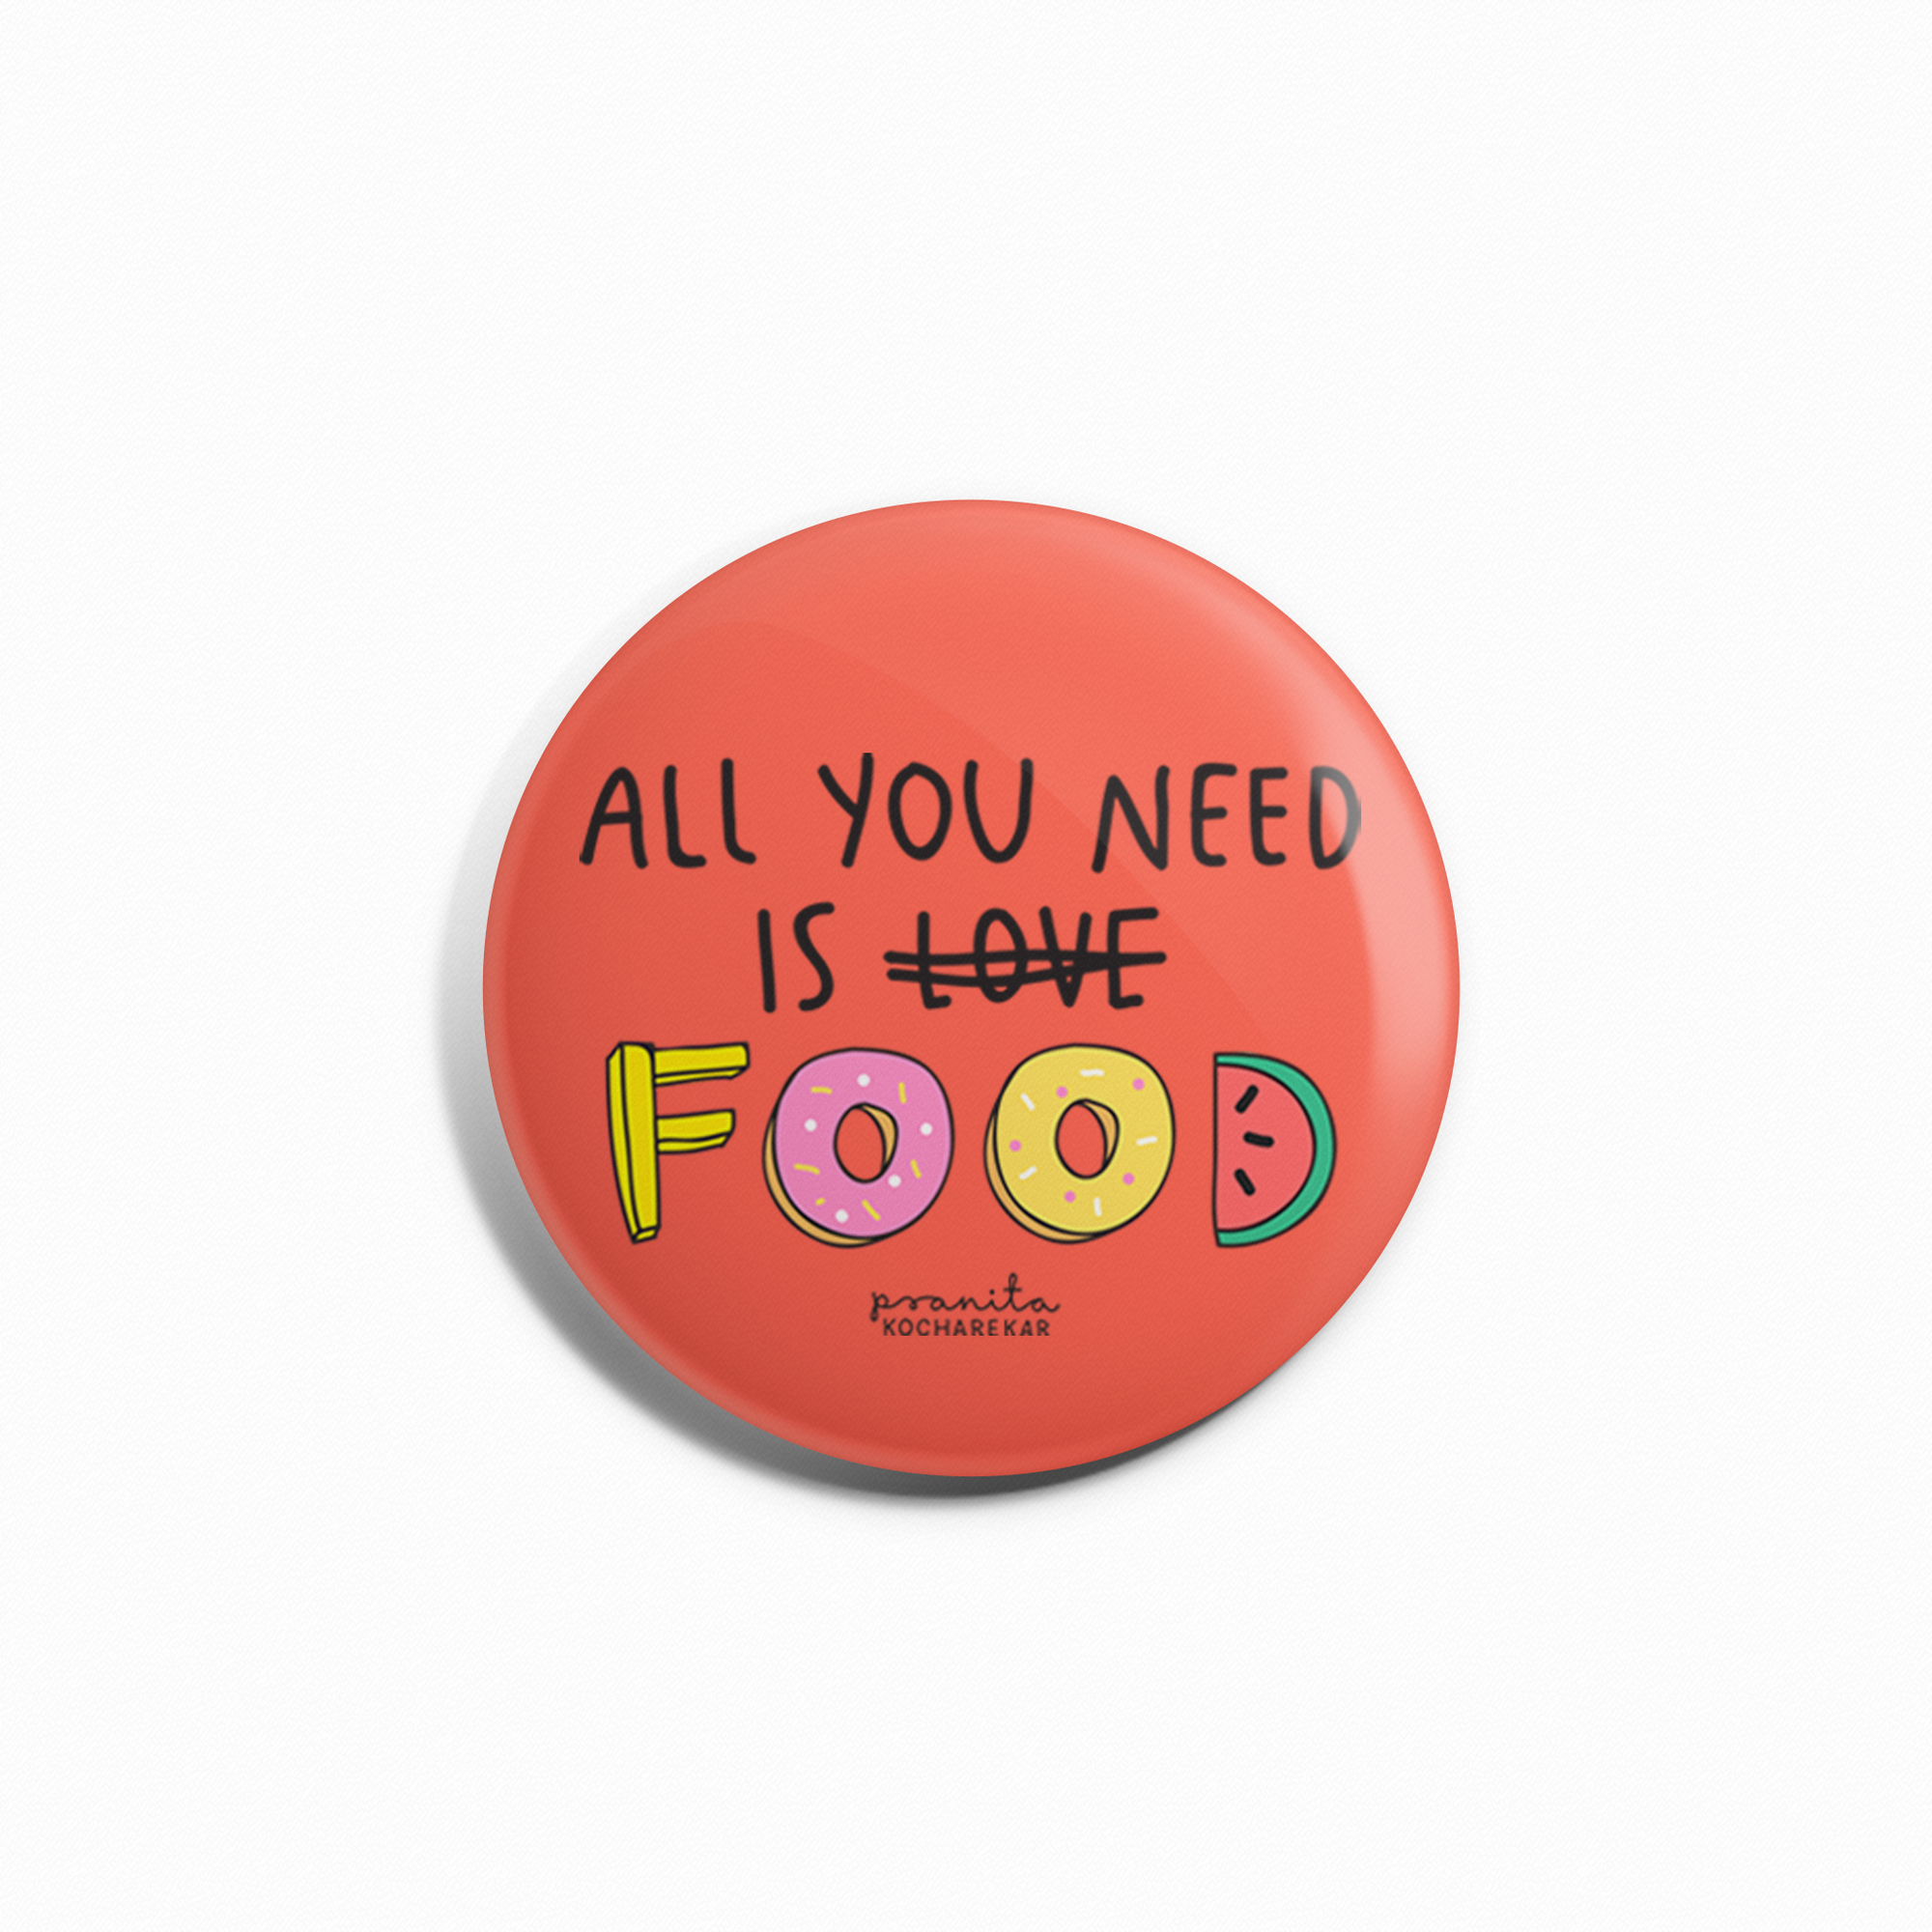 All You Need Is Food Badge -Pranita Kocharekar - India - www.superherotoystore.com